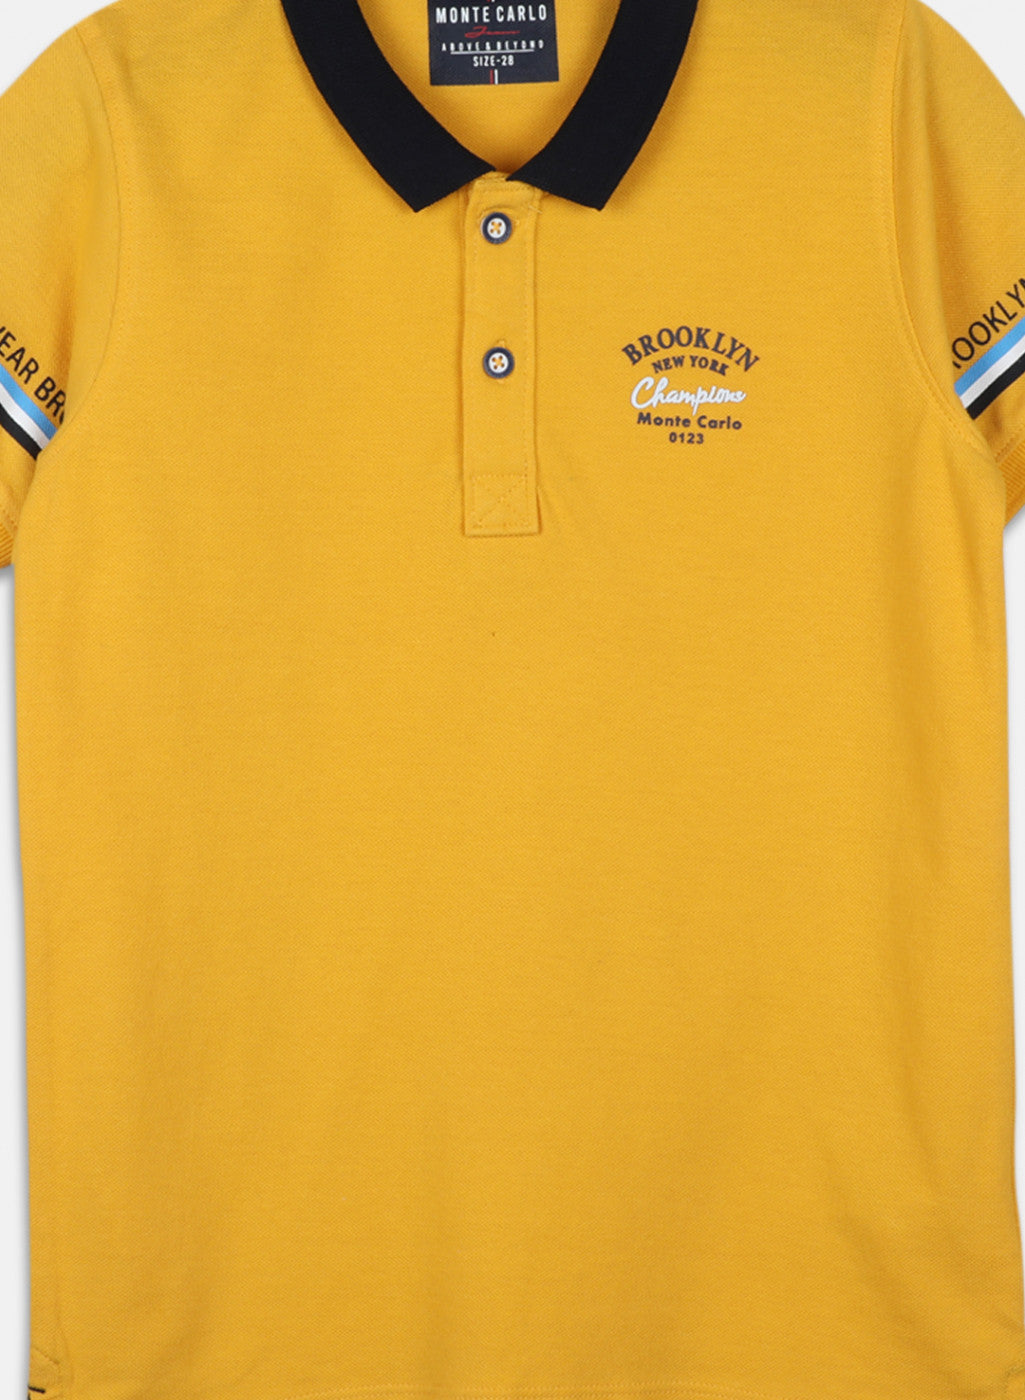 Boys Mustard Printed T-Shirt